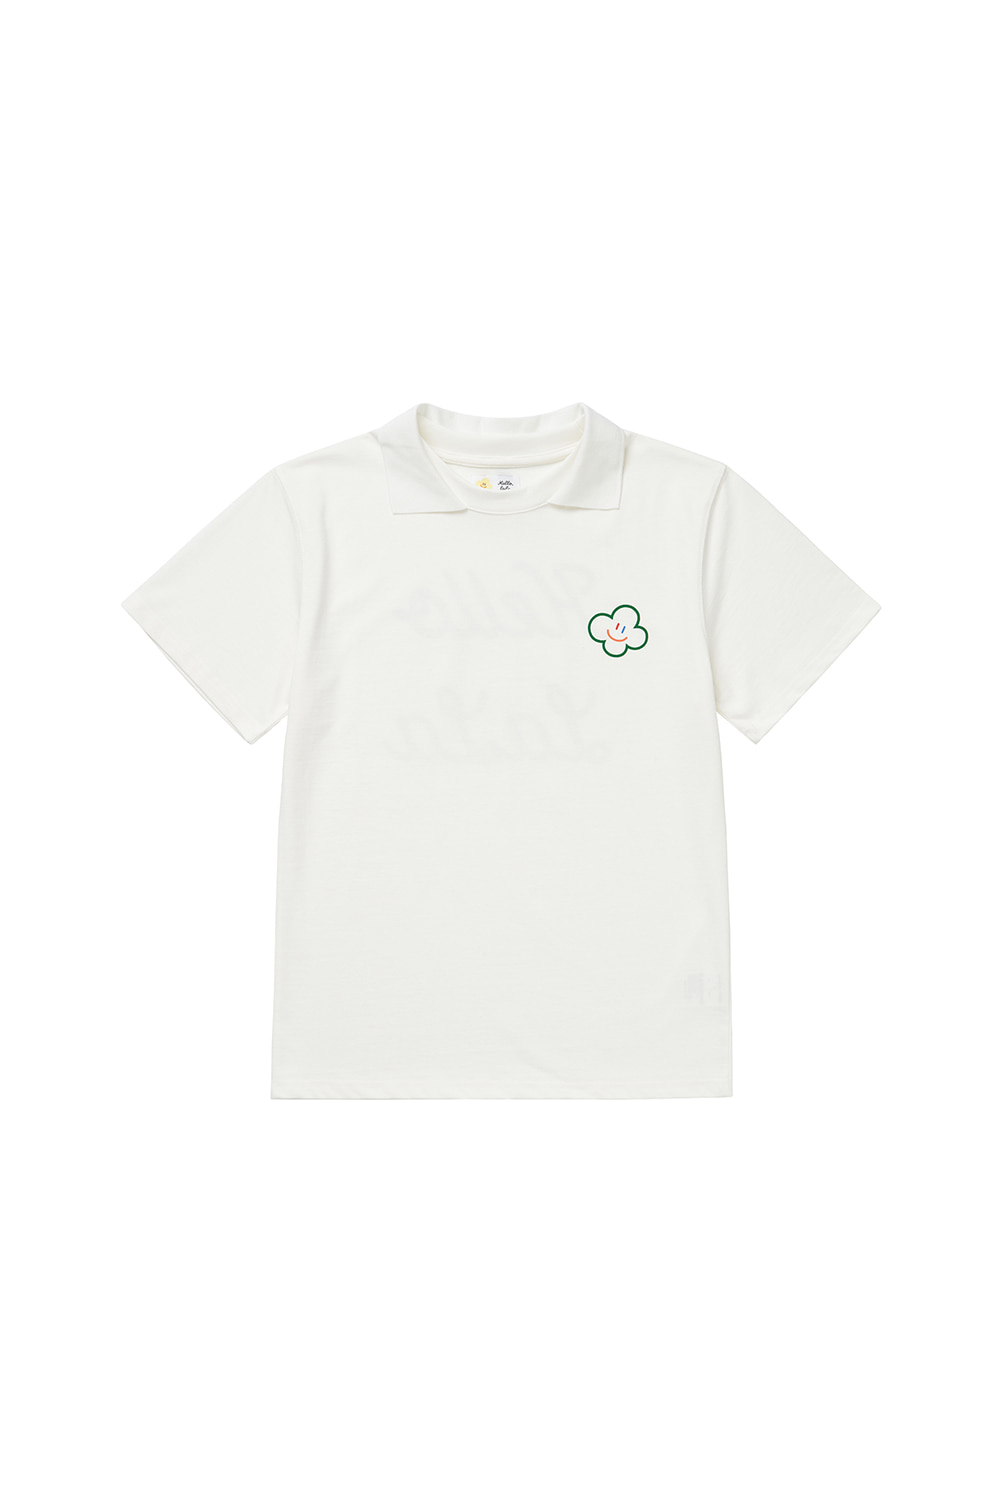 Hello LaLa New PK T-Shirts [White]